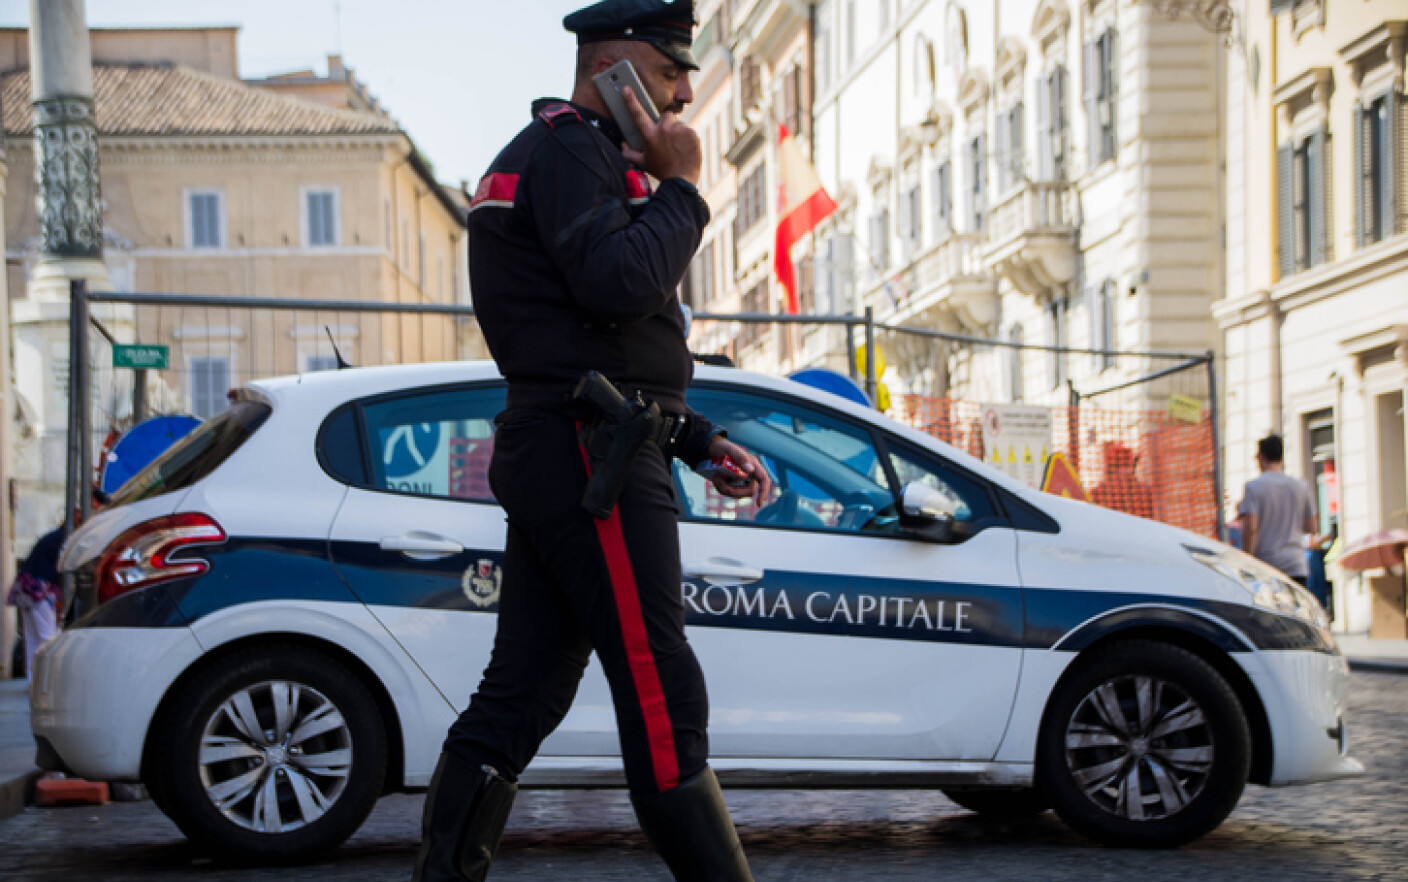 carabinieri in Roma